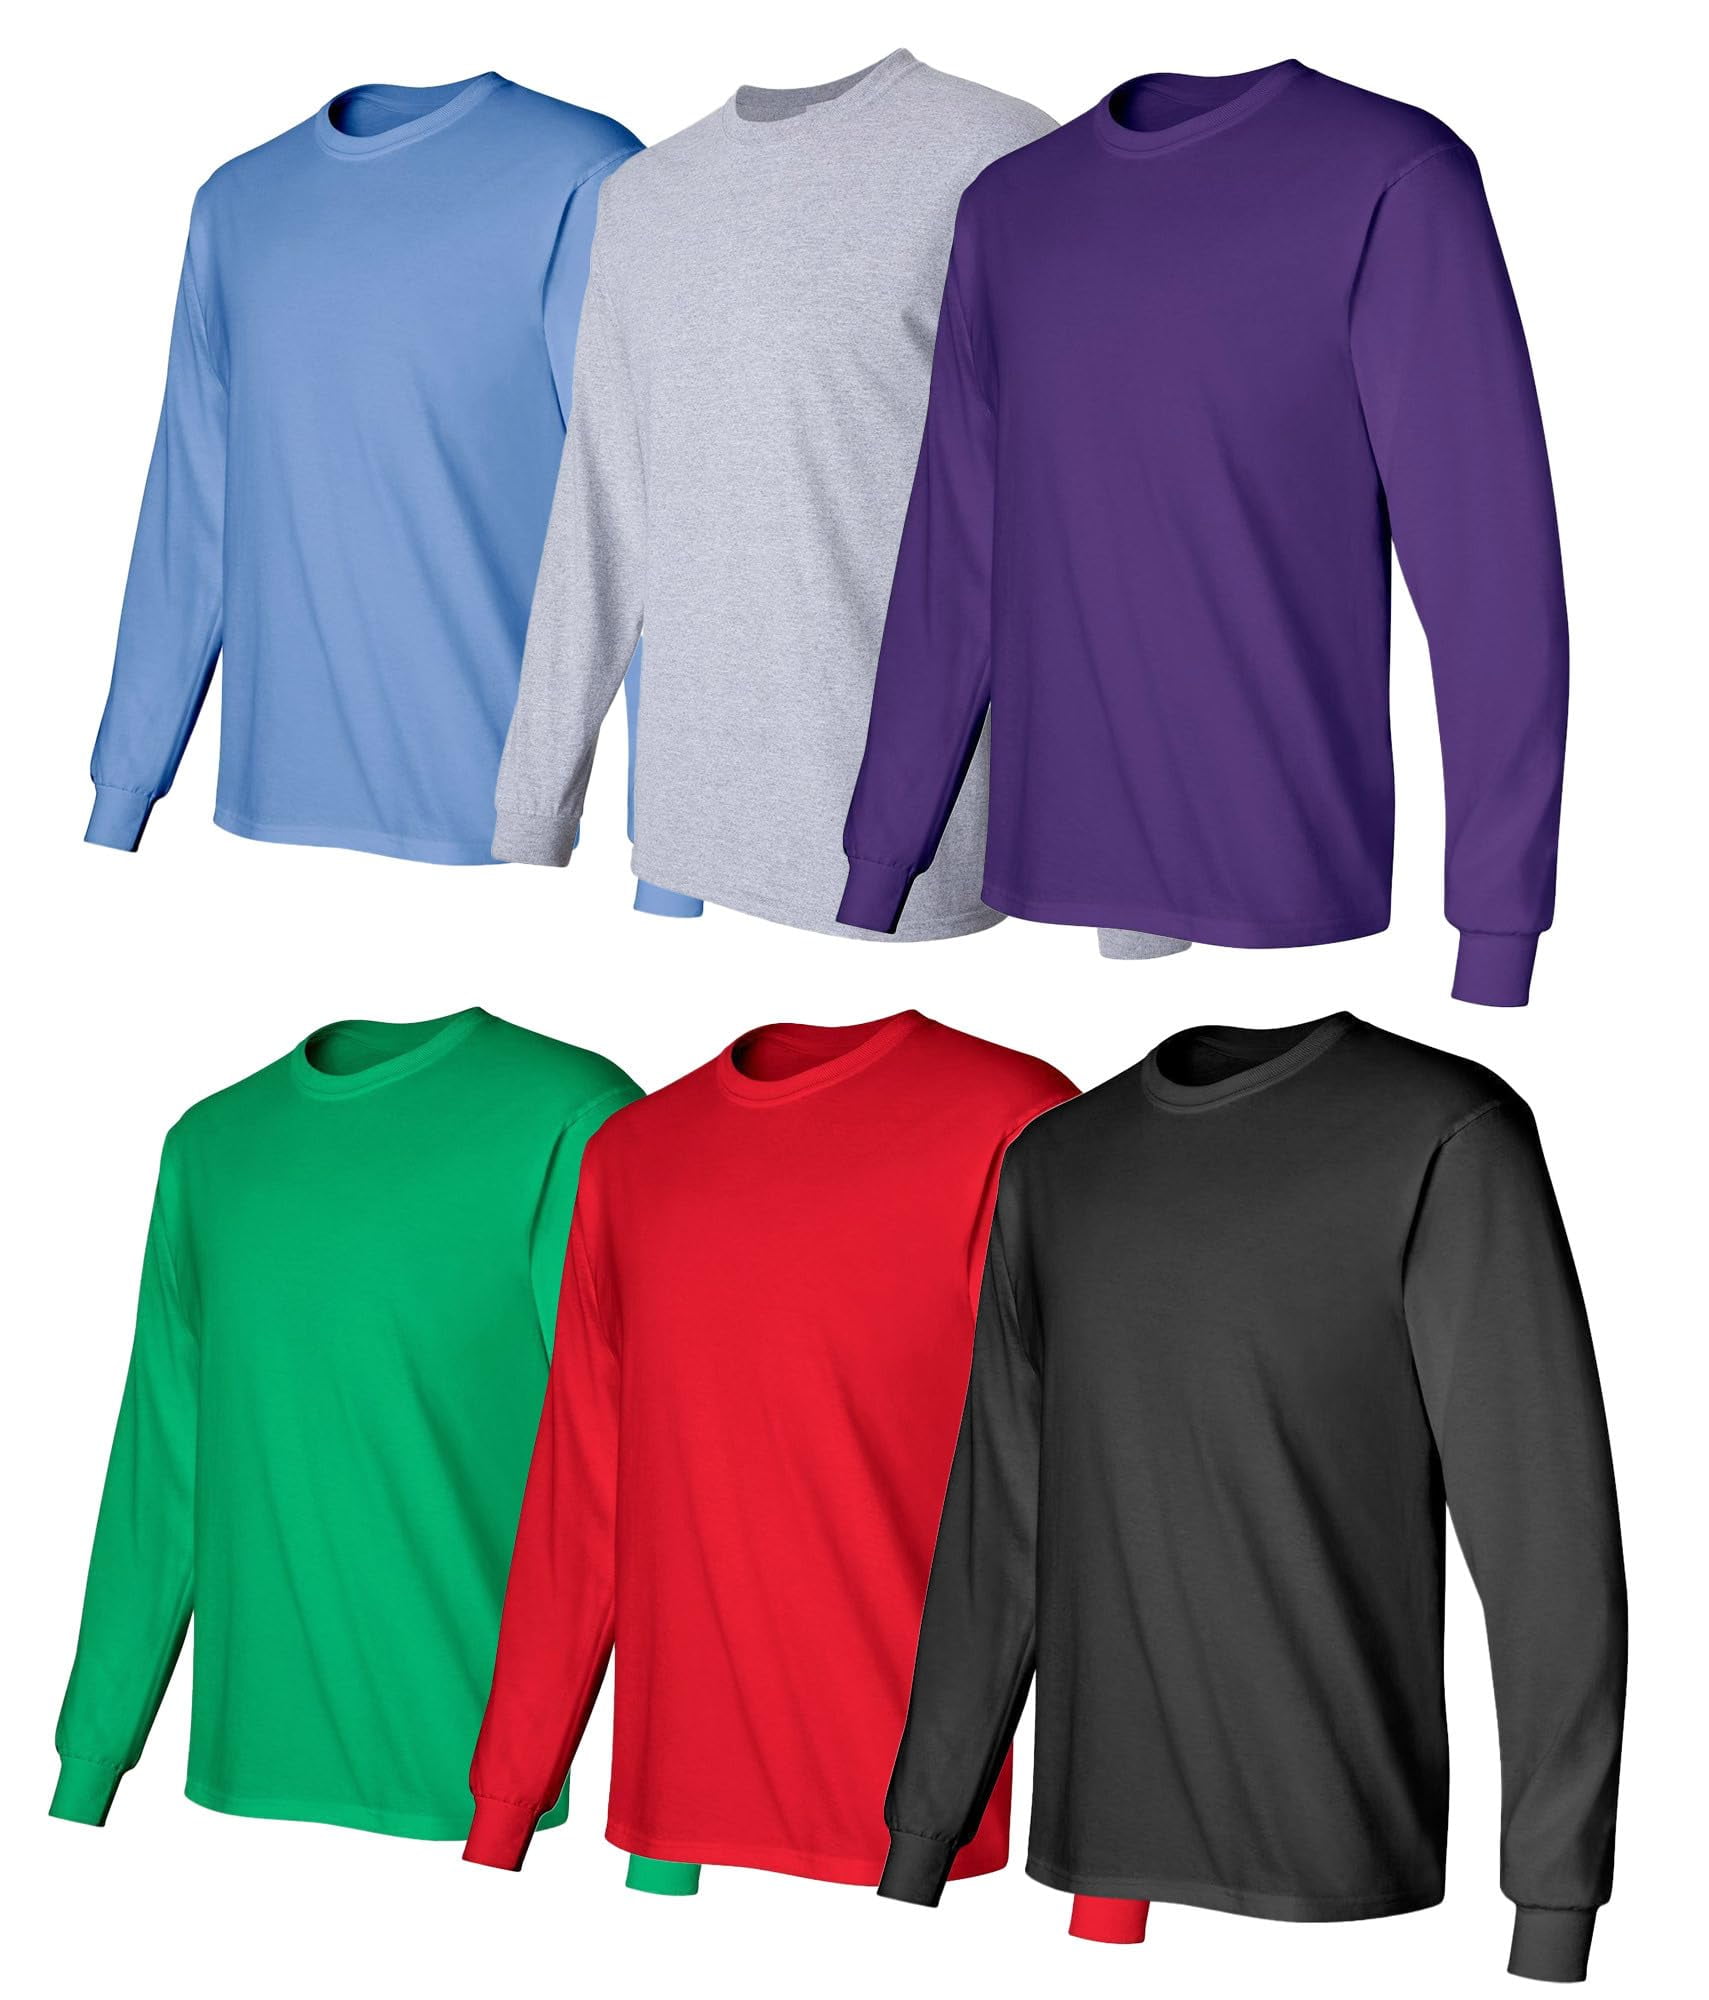 21+ Colorful Long Sleeve Shirts